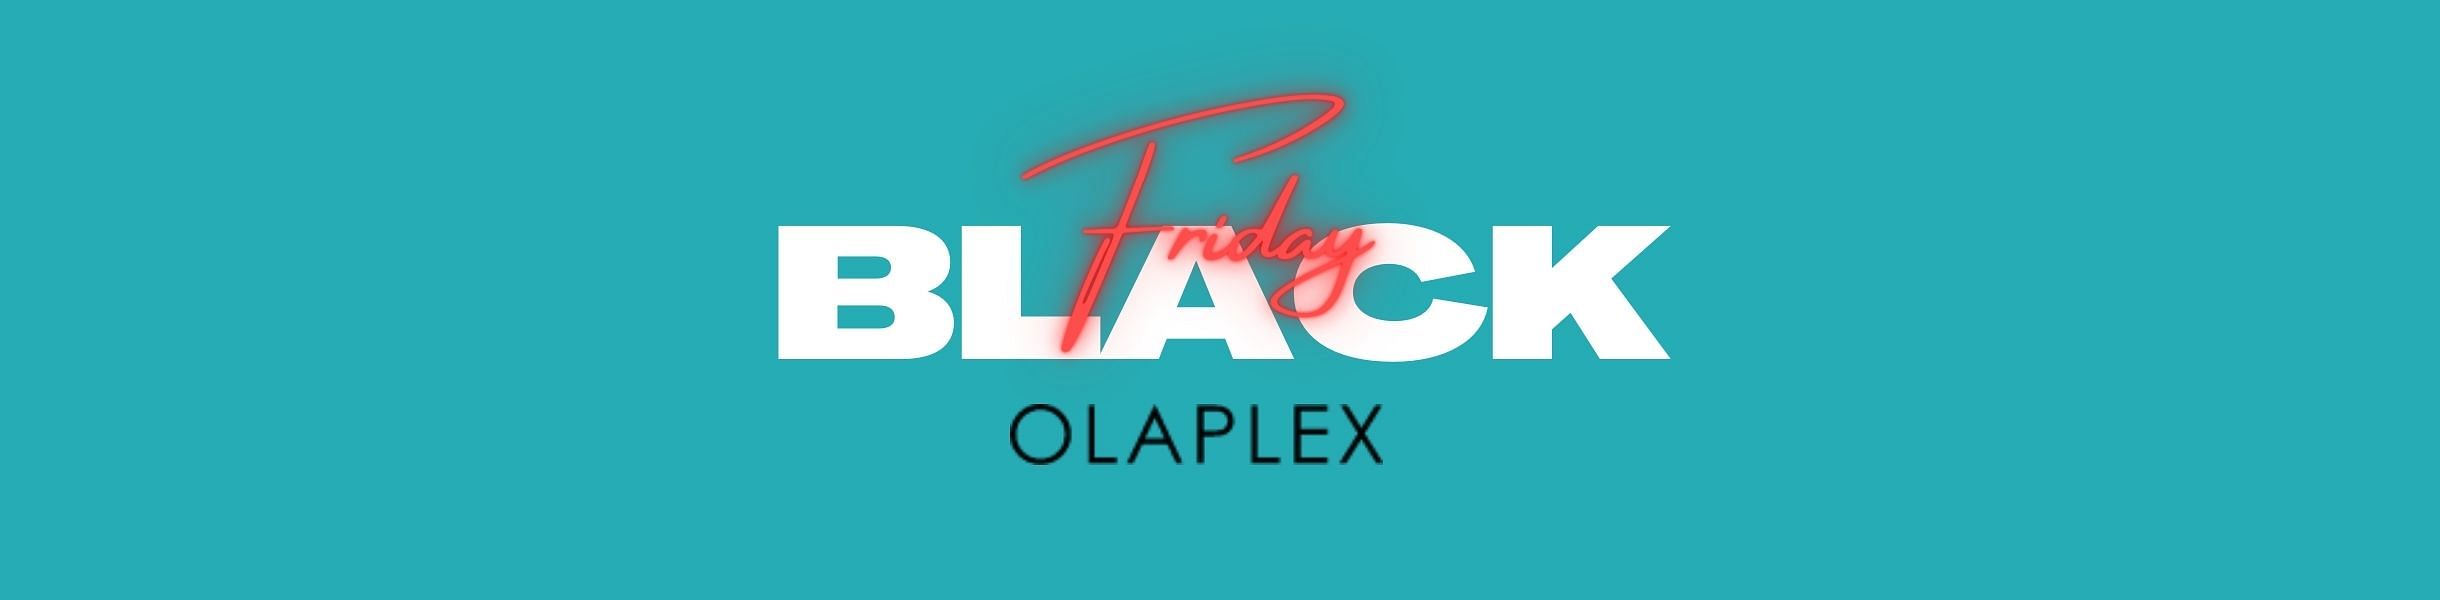 OLAPLEX - BLACK FRIDAY